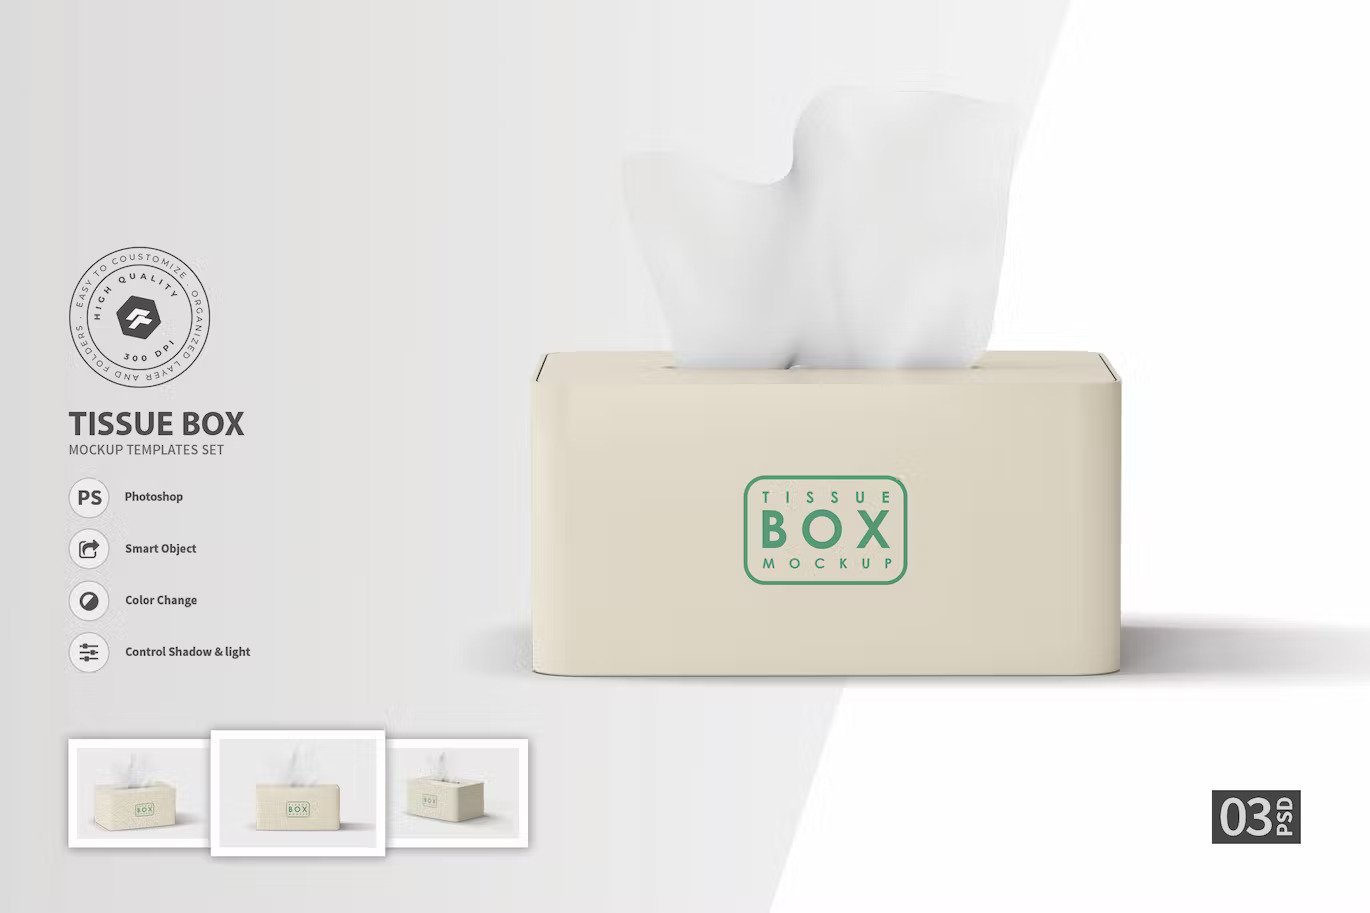 Three different tissue box mockups